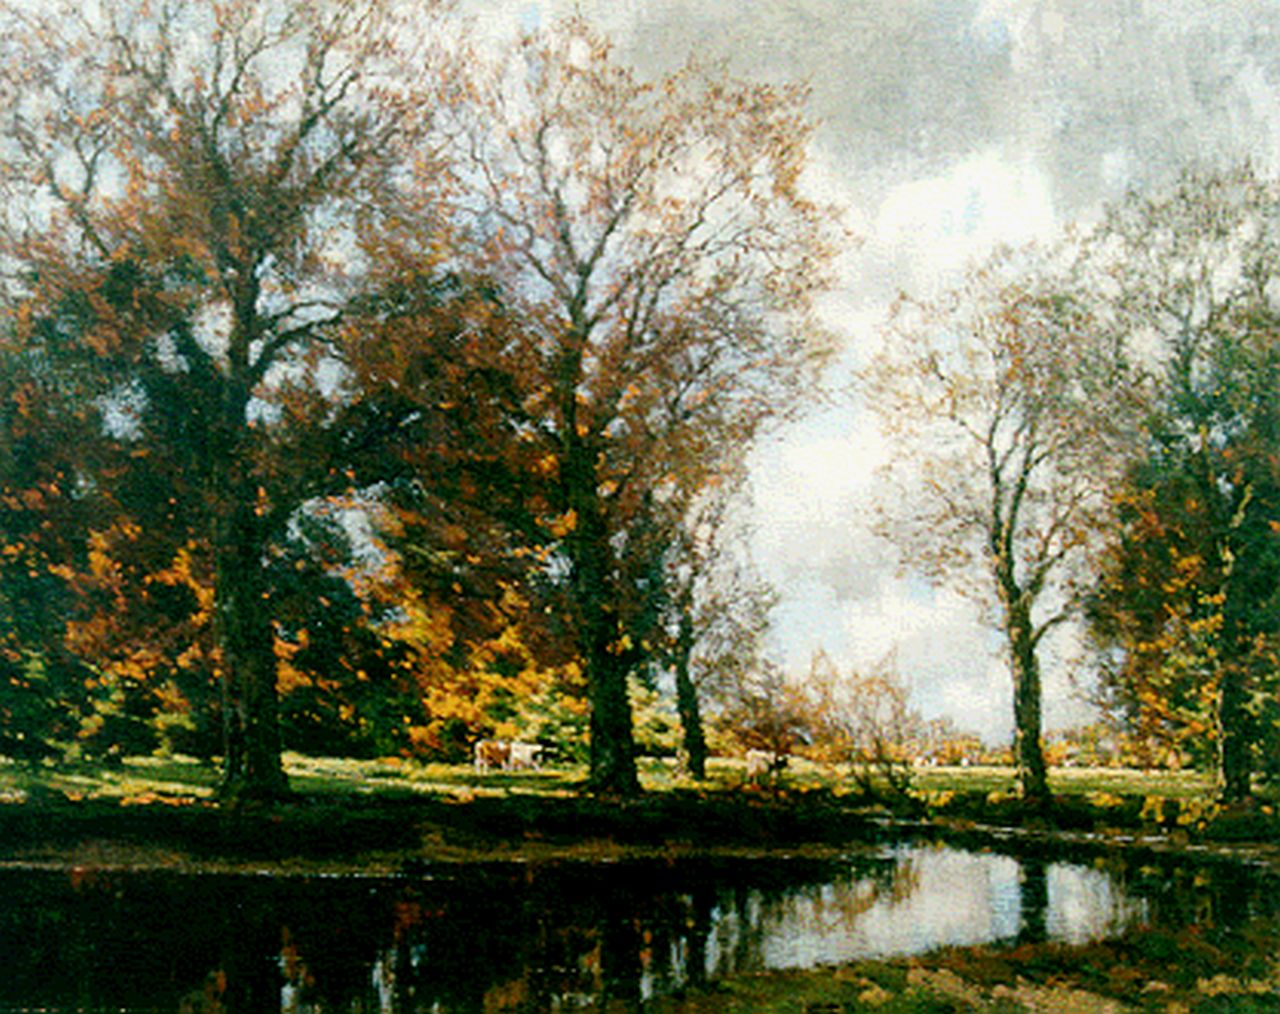 Gorter A.M.  | 'Arnold' Marc Gorter, Autumn landscape with cows, Öl auf Leinwand 67,6 x 84,9 cm, signed l.r.